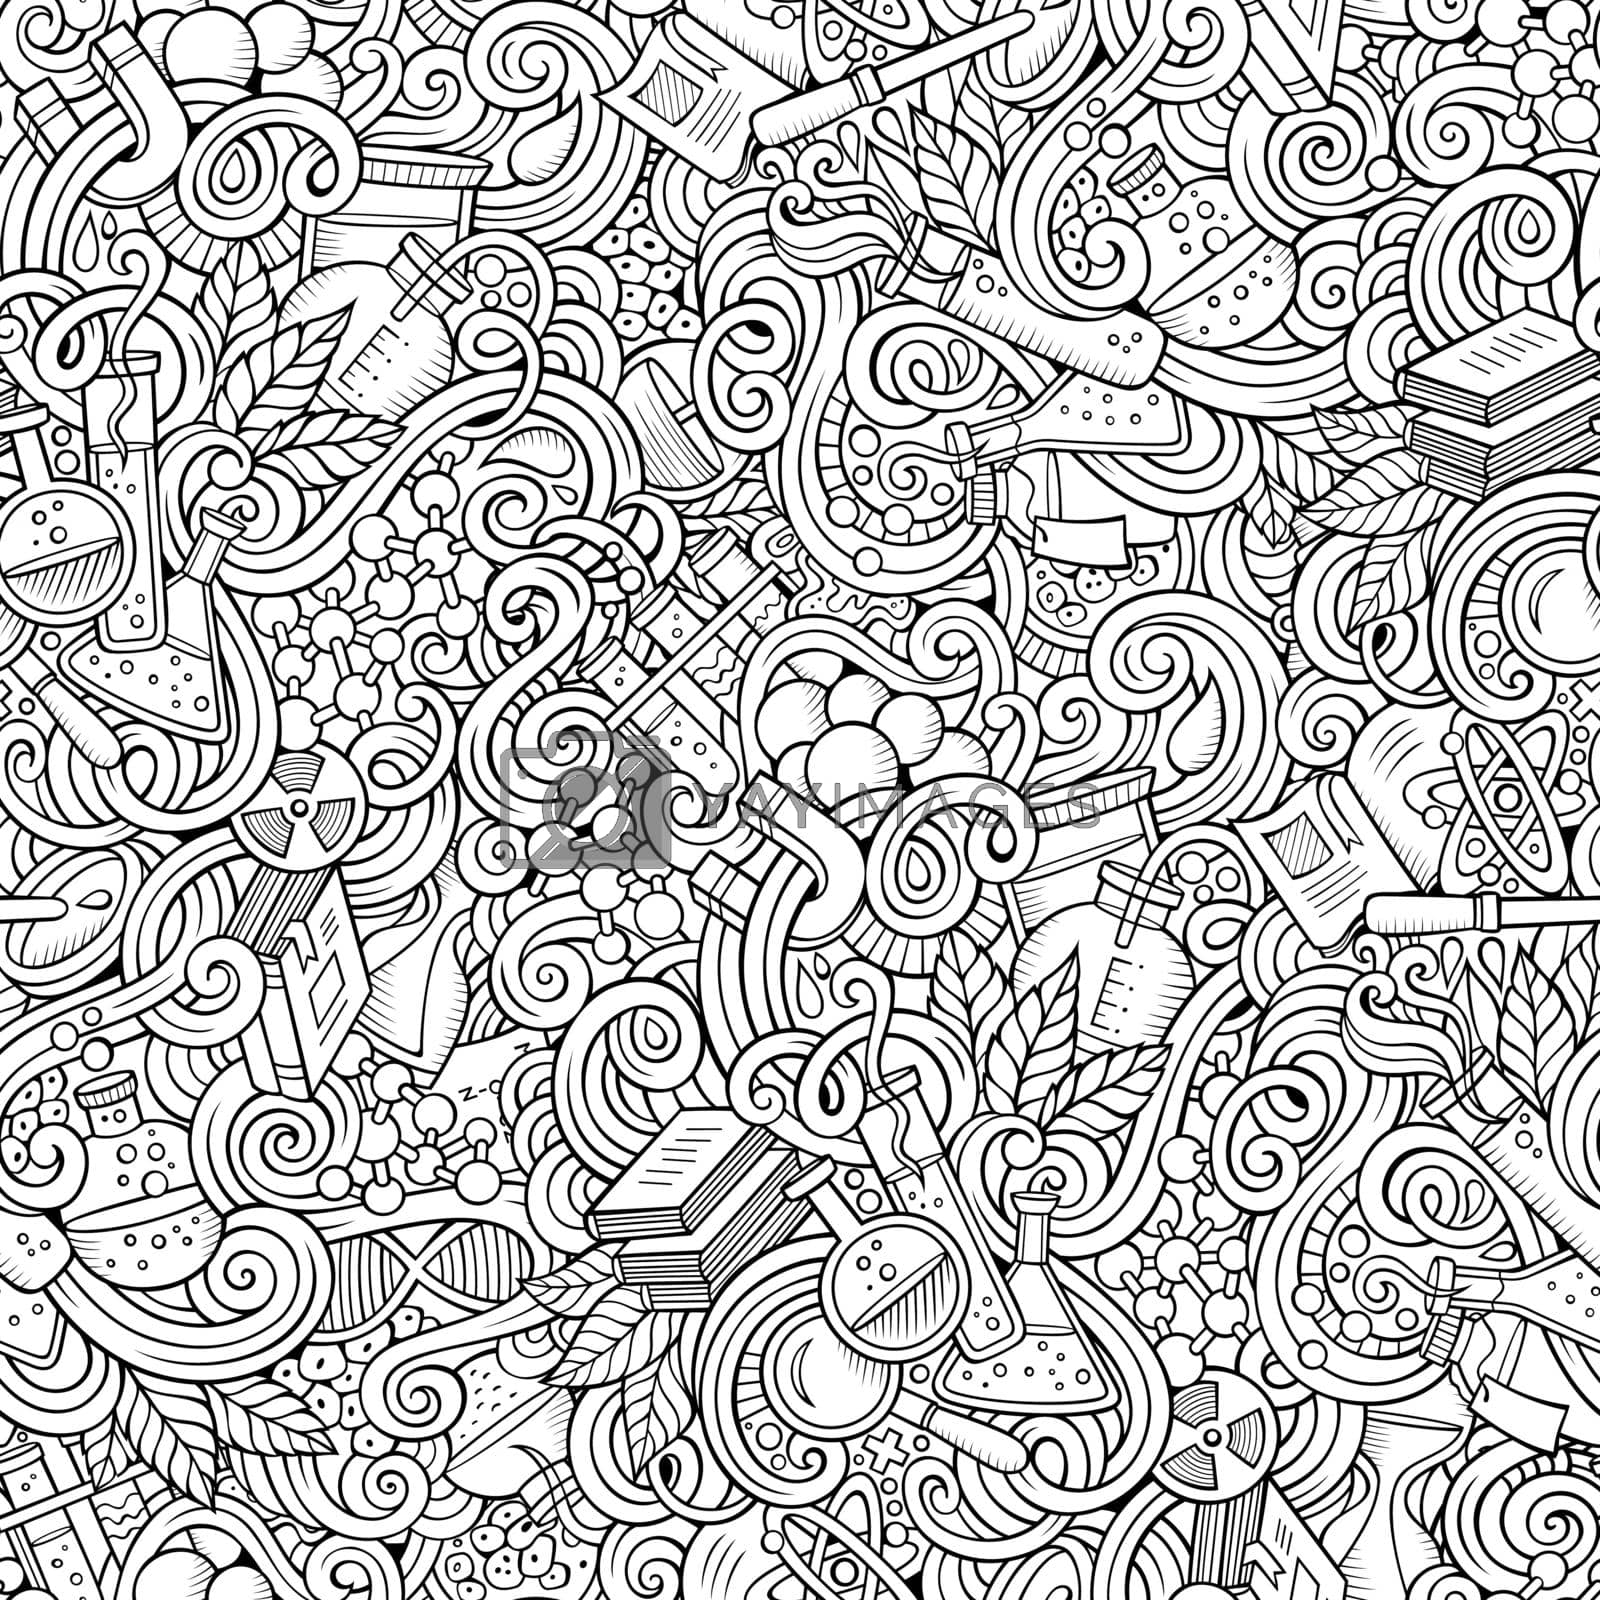 Royalty free image of Cartoon hand-drawn science doodles seamless pattern by balabolka